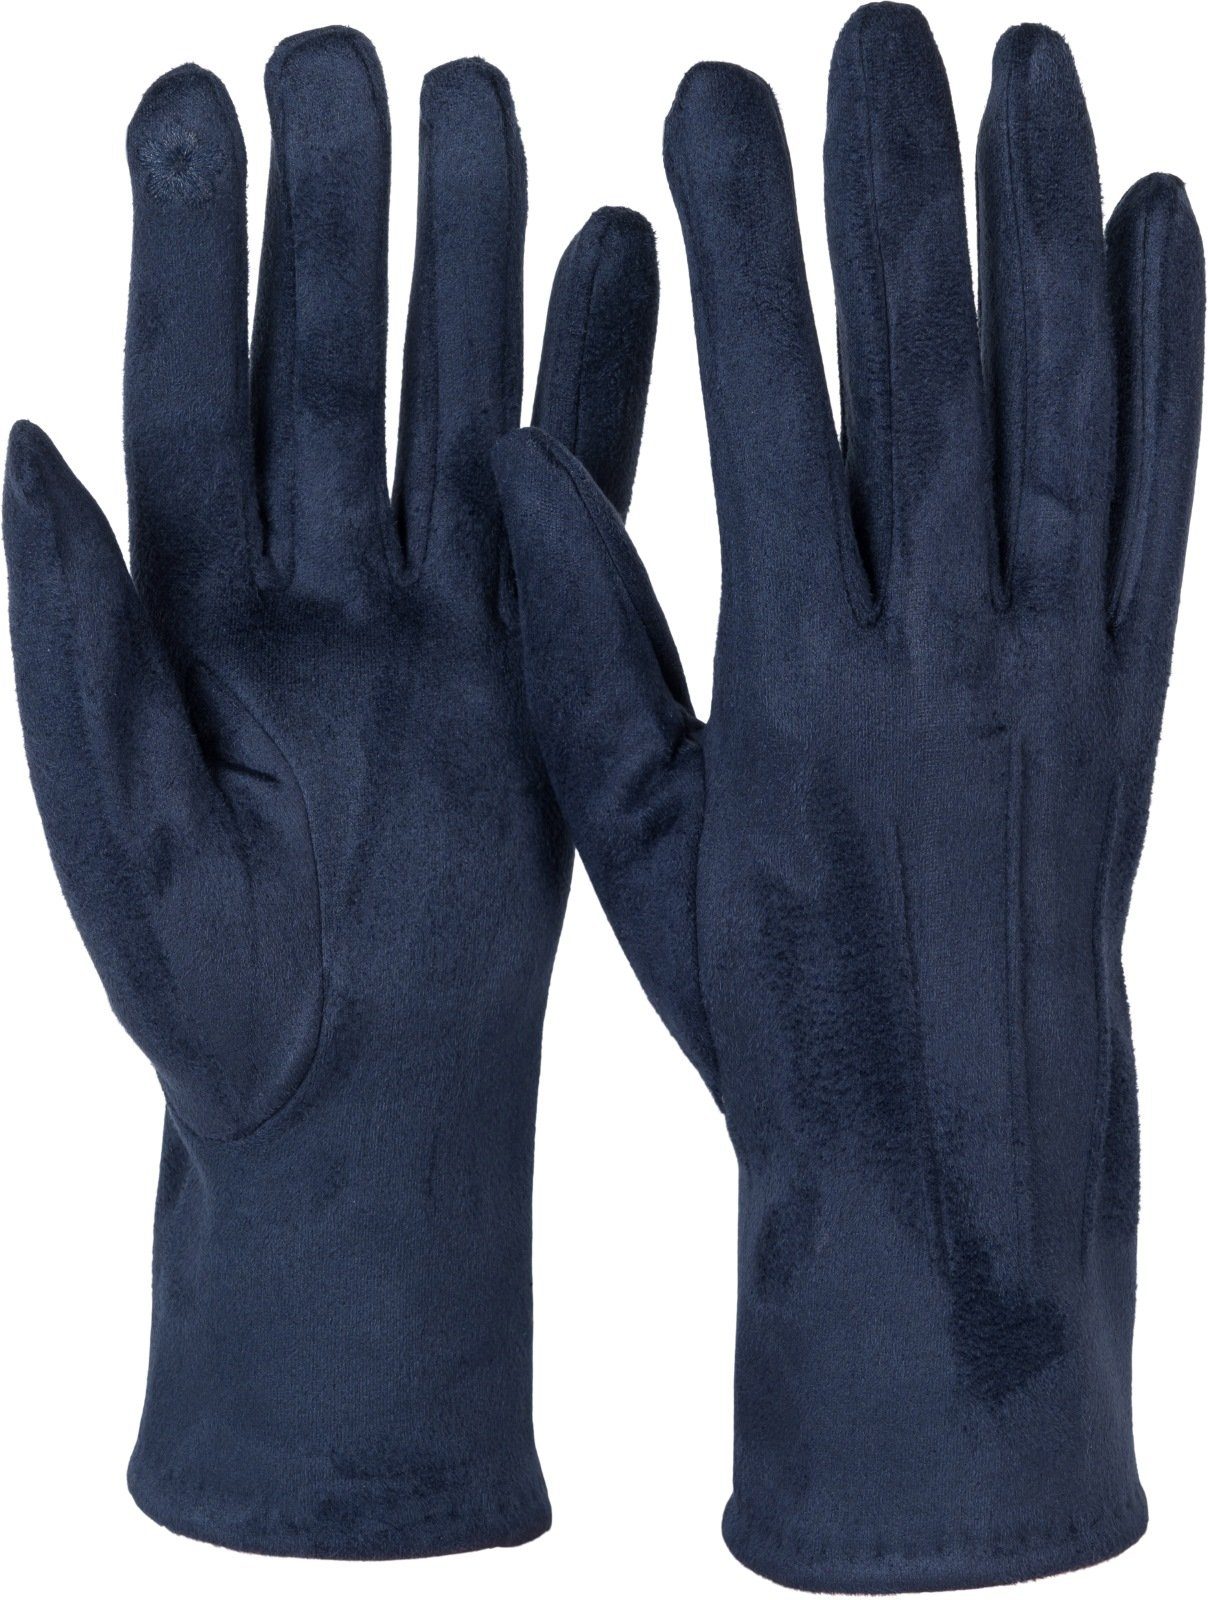 styleBREAKER Fleecehandschuhe Einfarbige Touchscreen Handschuhe Ziernähte Dunkelblau